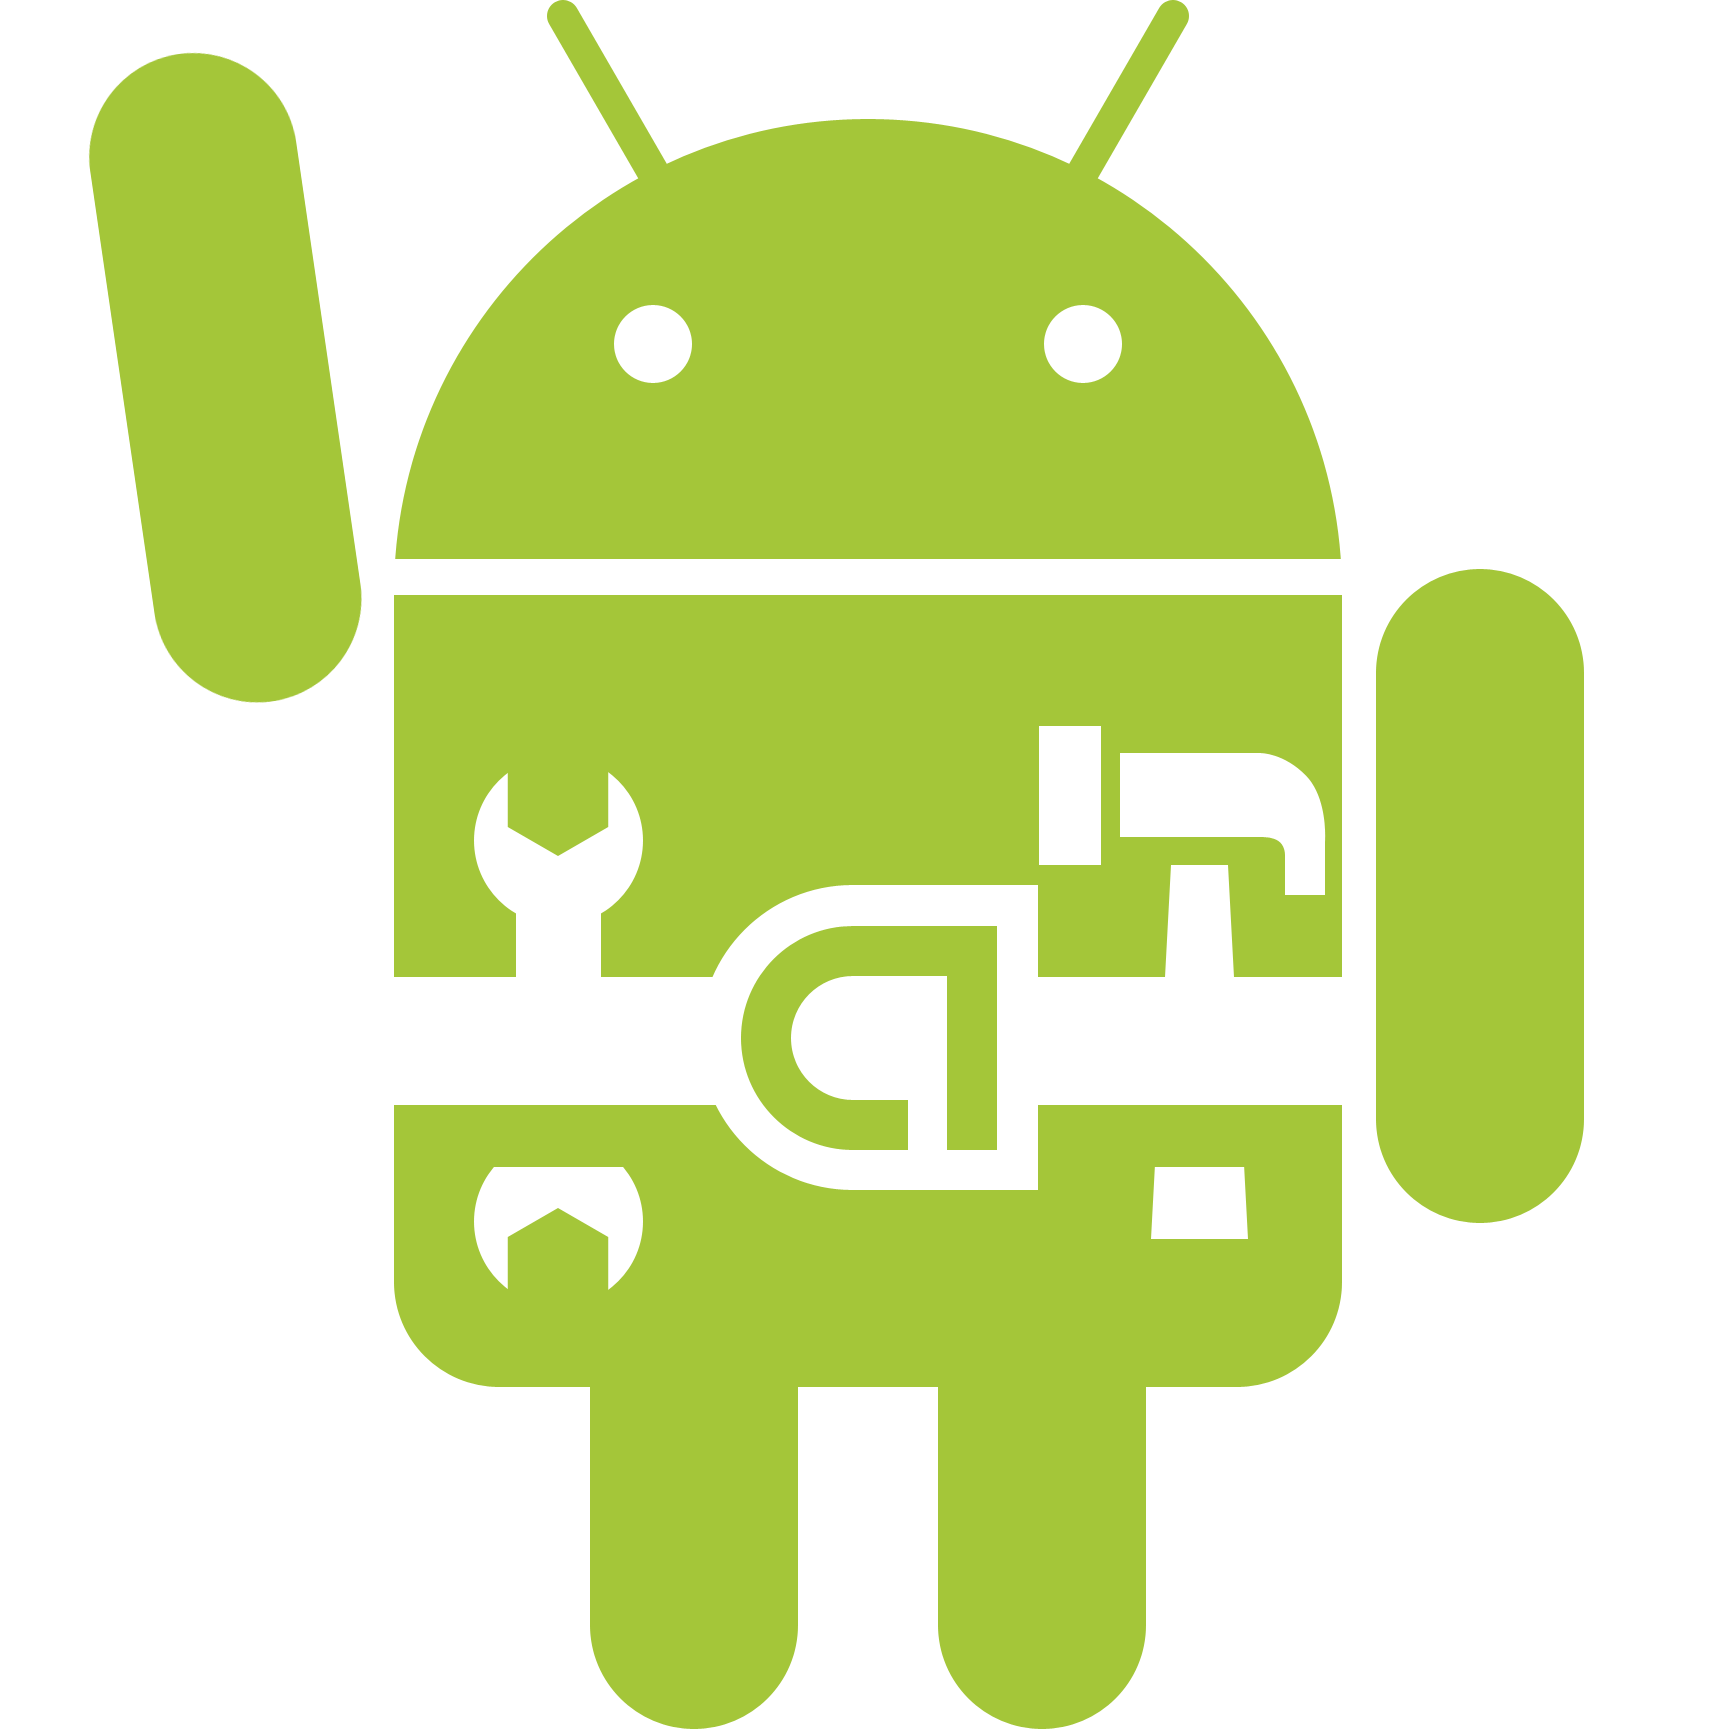 Apk android apps ru. Иконка андроид. Значок Android. Значок Android без фона. Андроид ярлык.